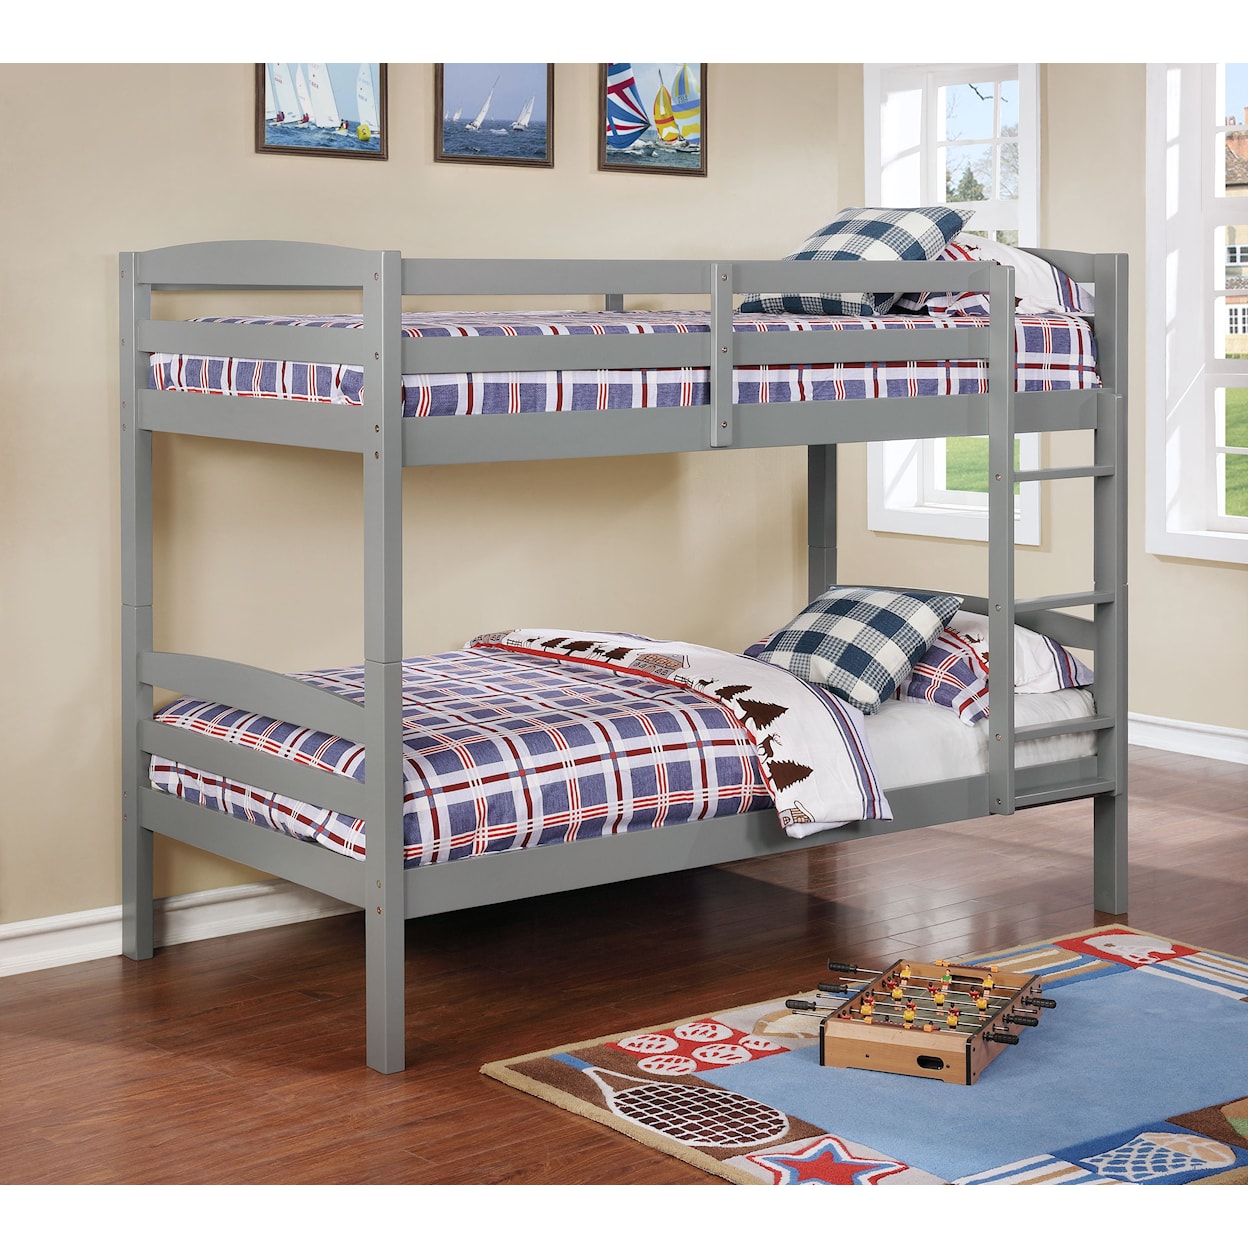 Alex's Furniture B801G Twin Bunk Bed